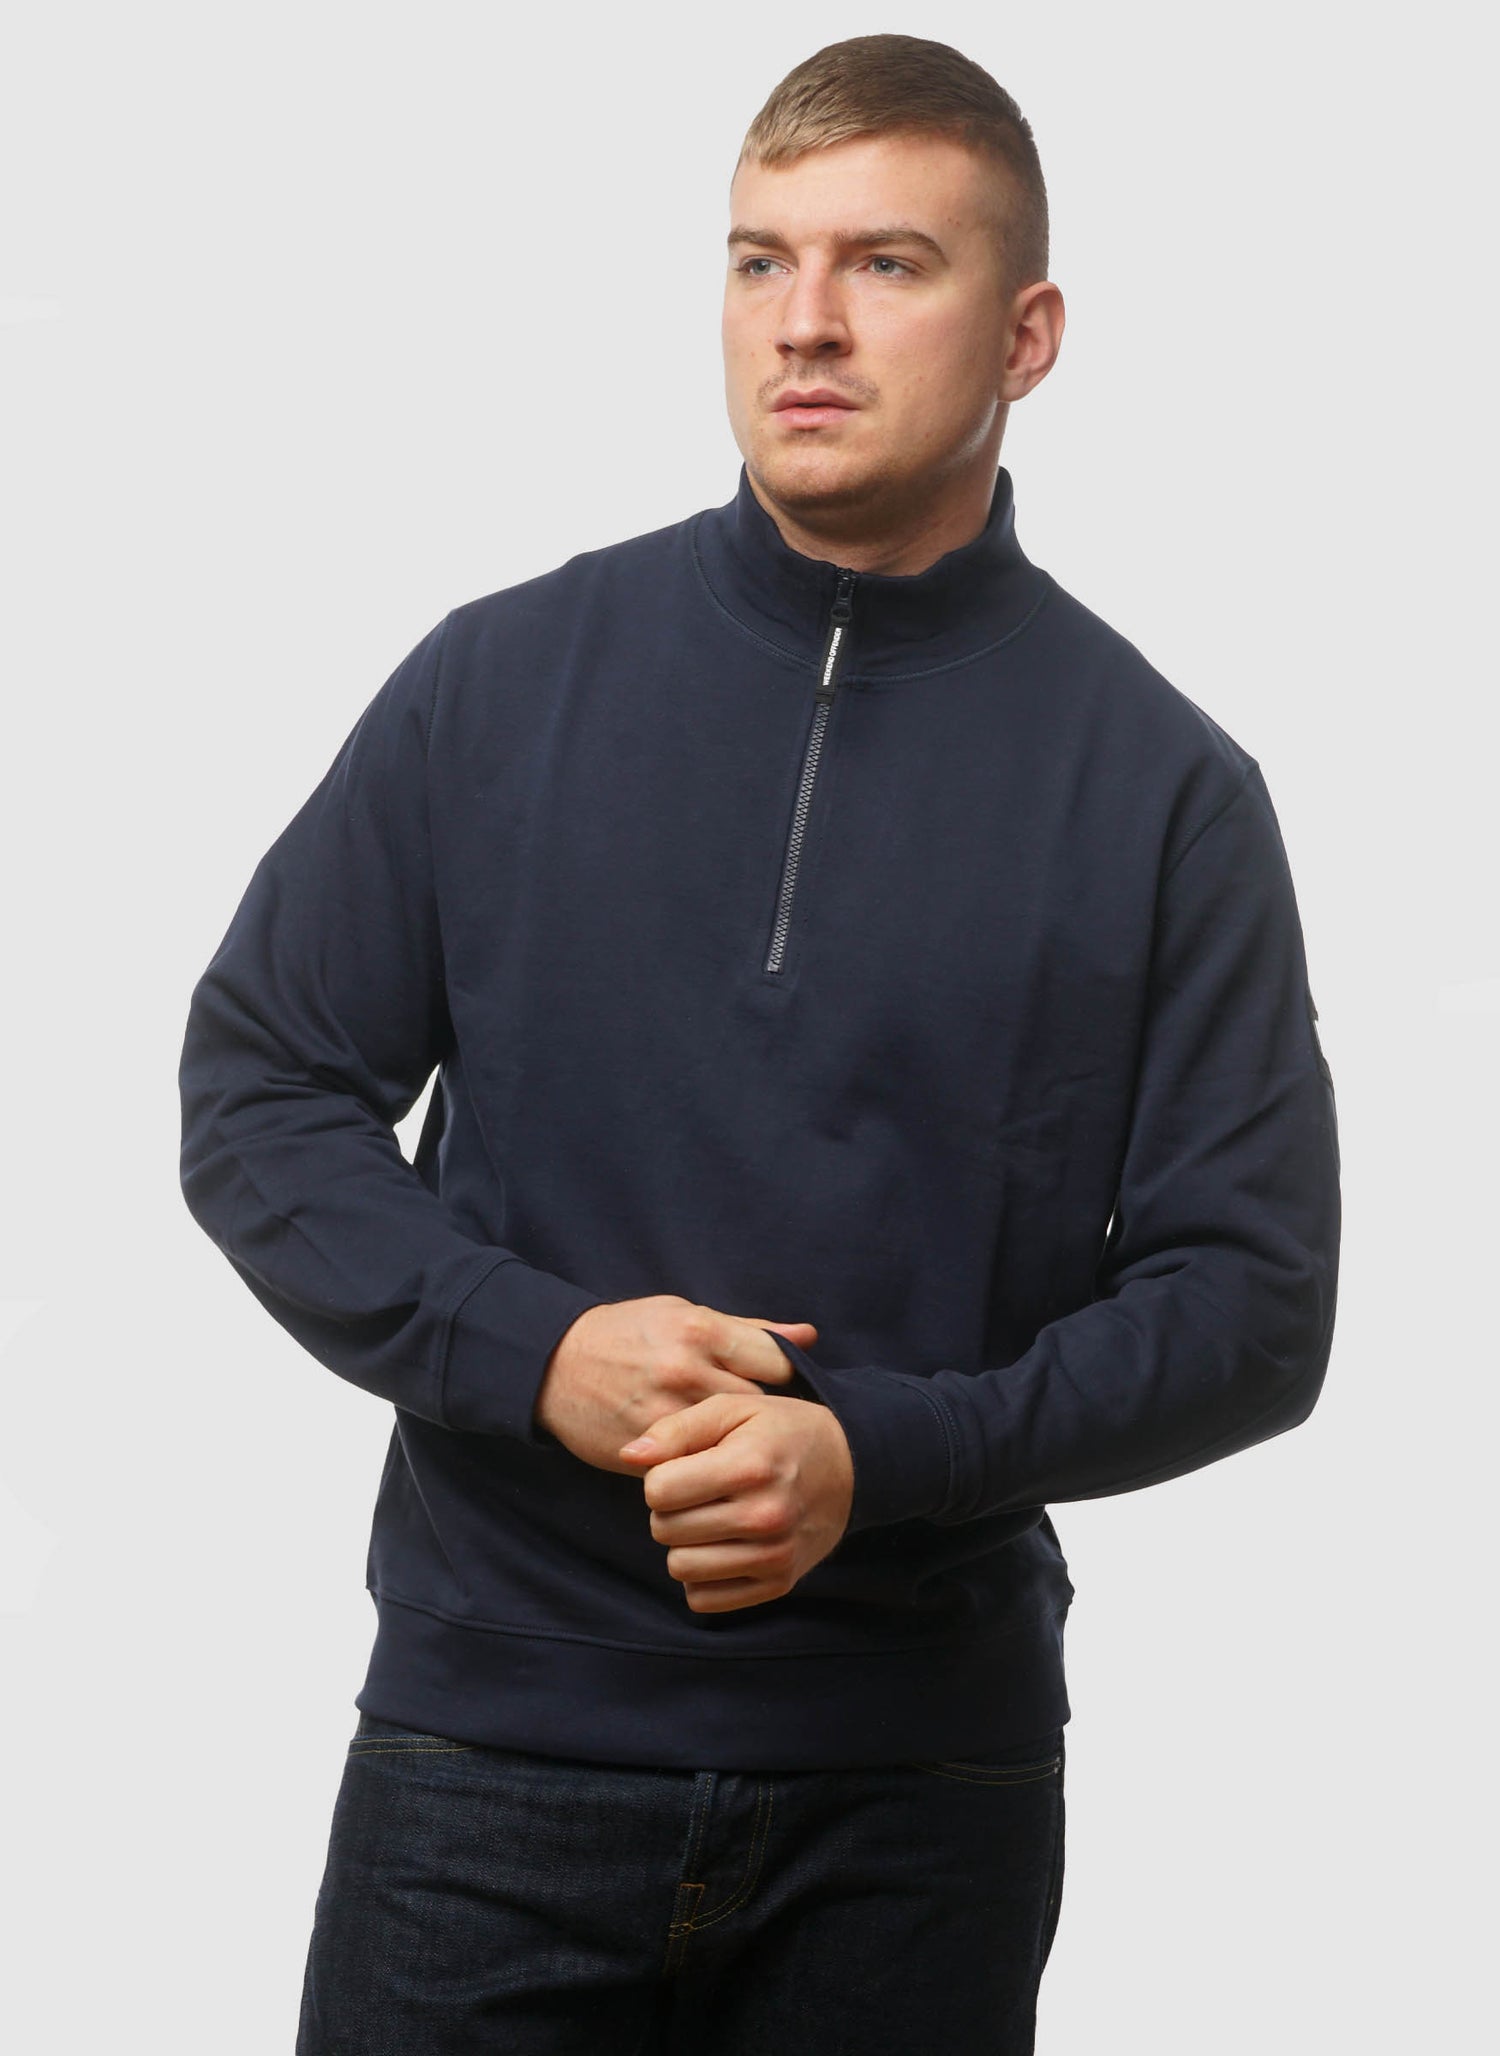 Kraviz Sweatshirt - Navy